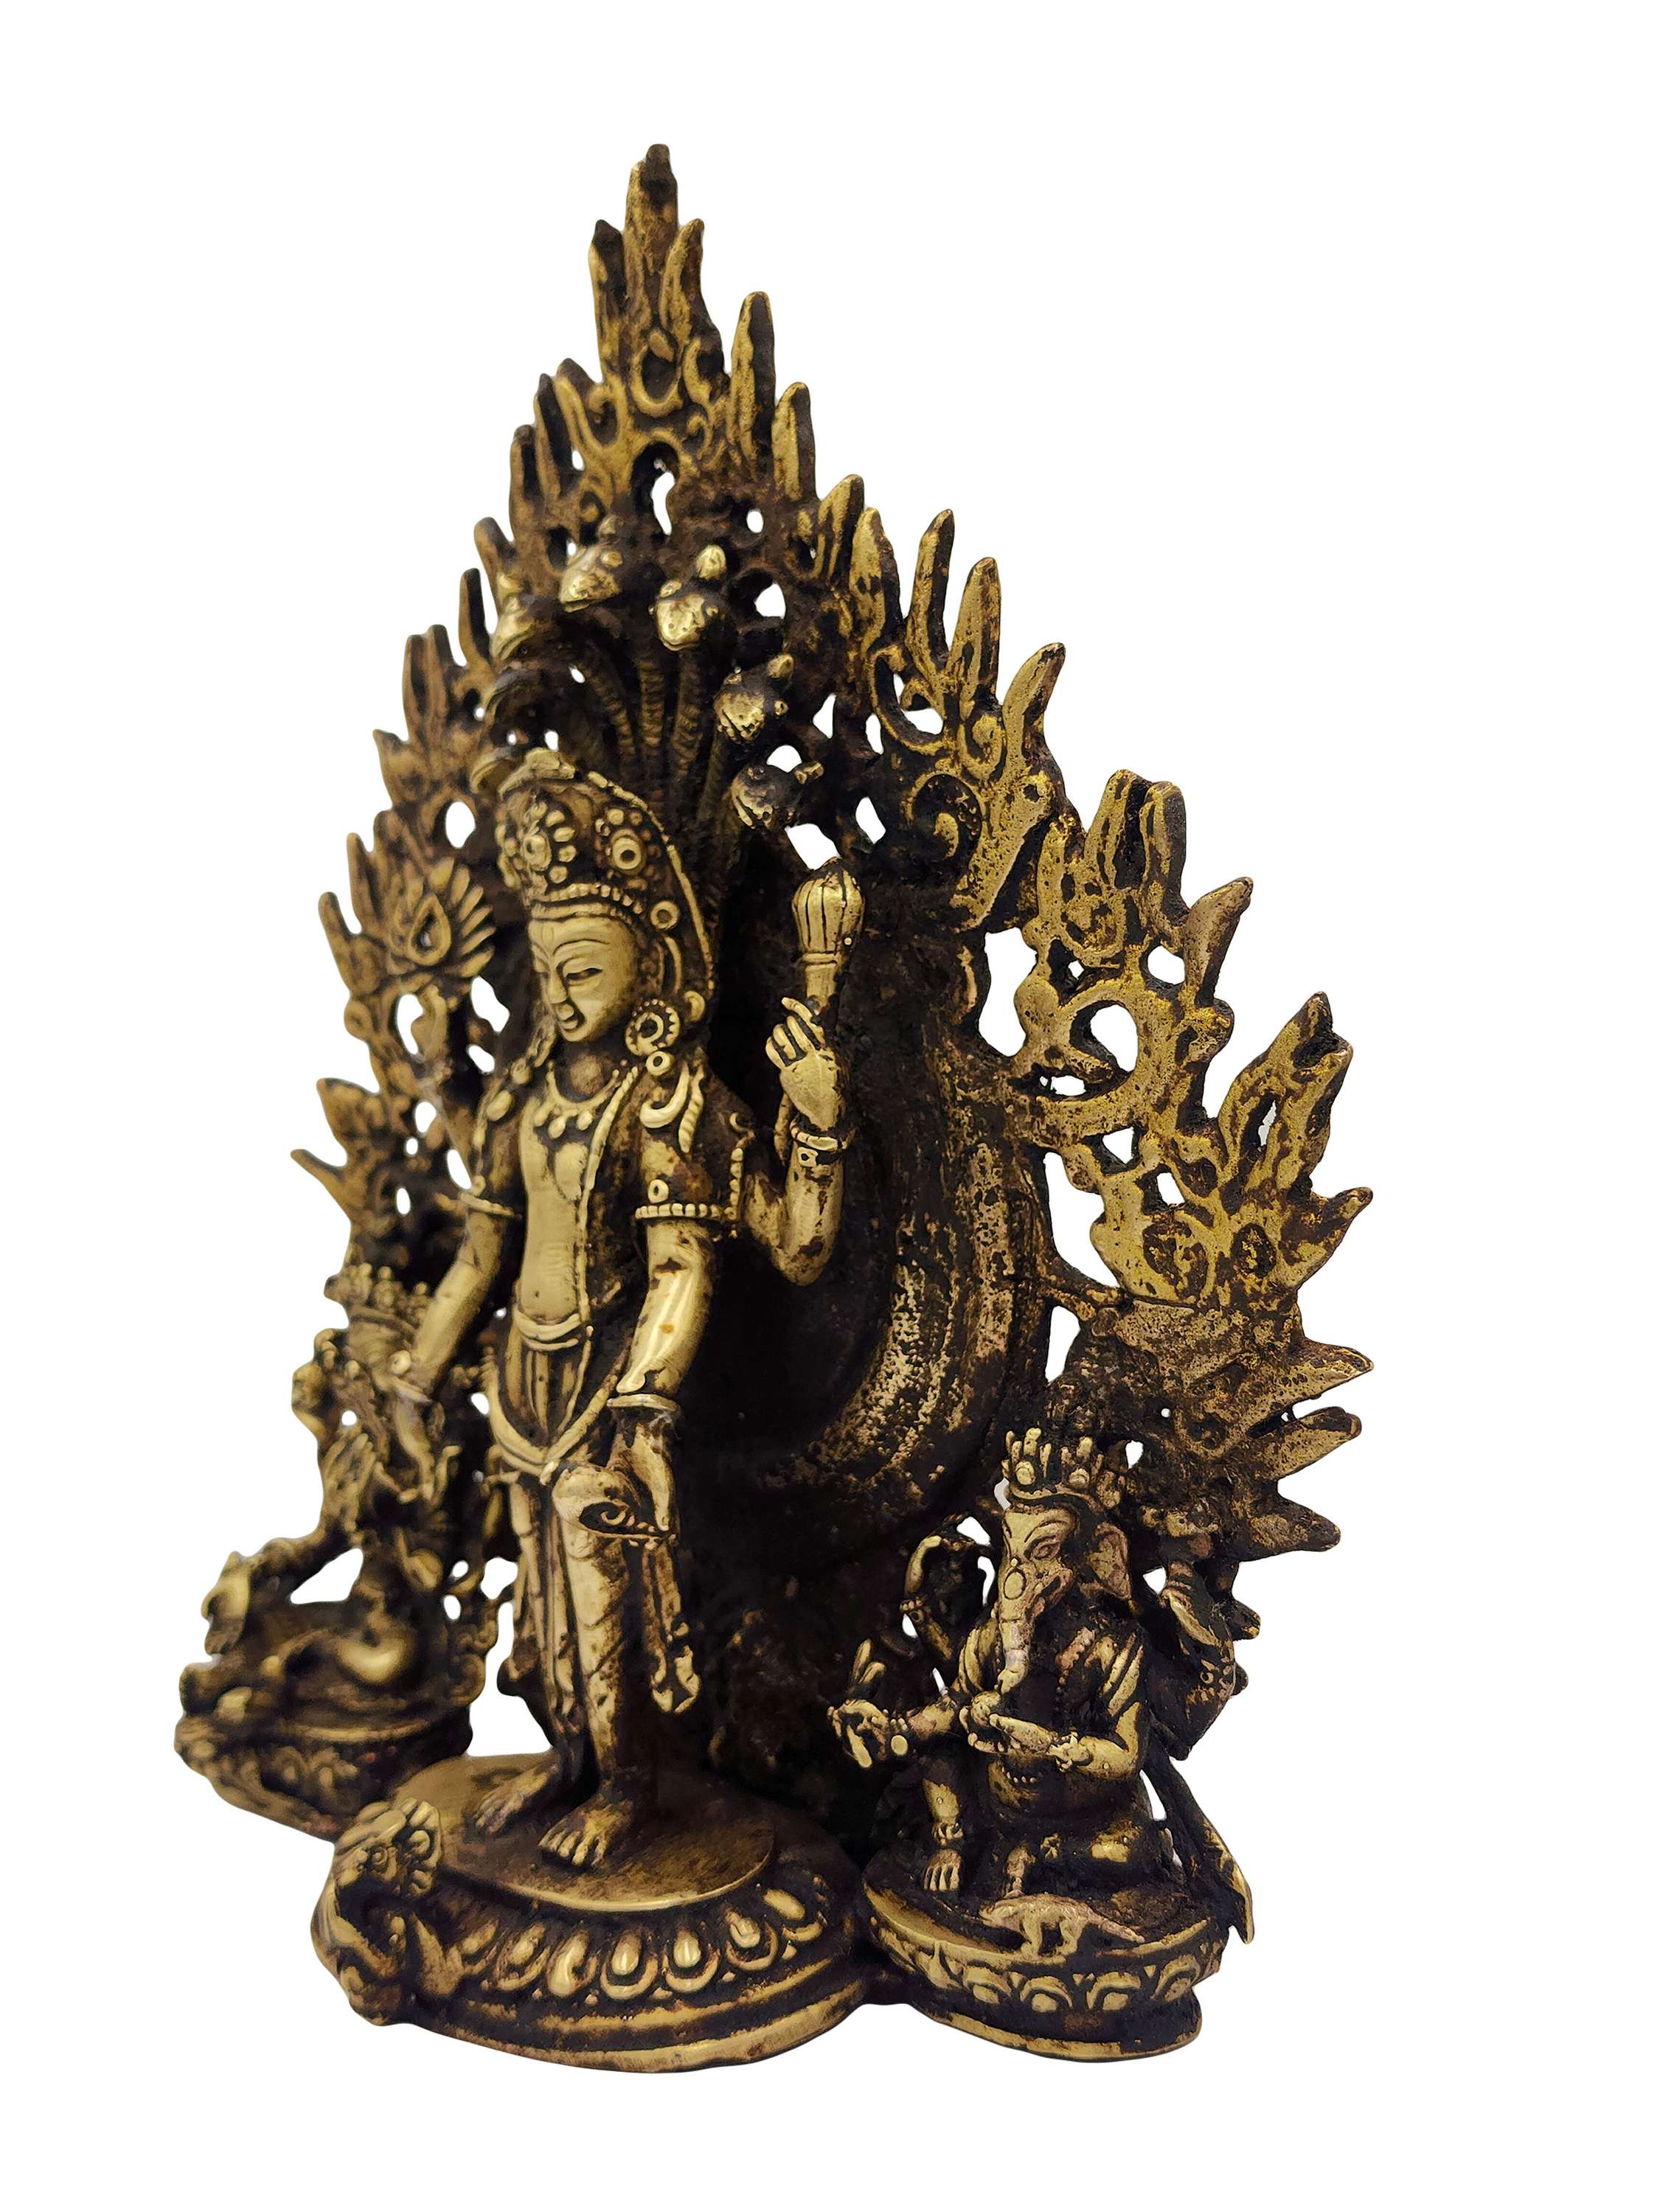 Buddhist Statue Of Vishnu With Lakshmi And Ganesh, antique Finishing